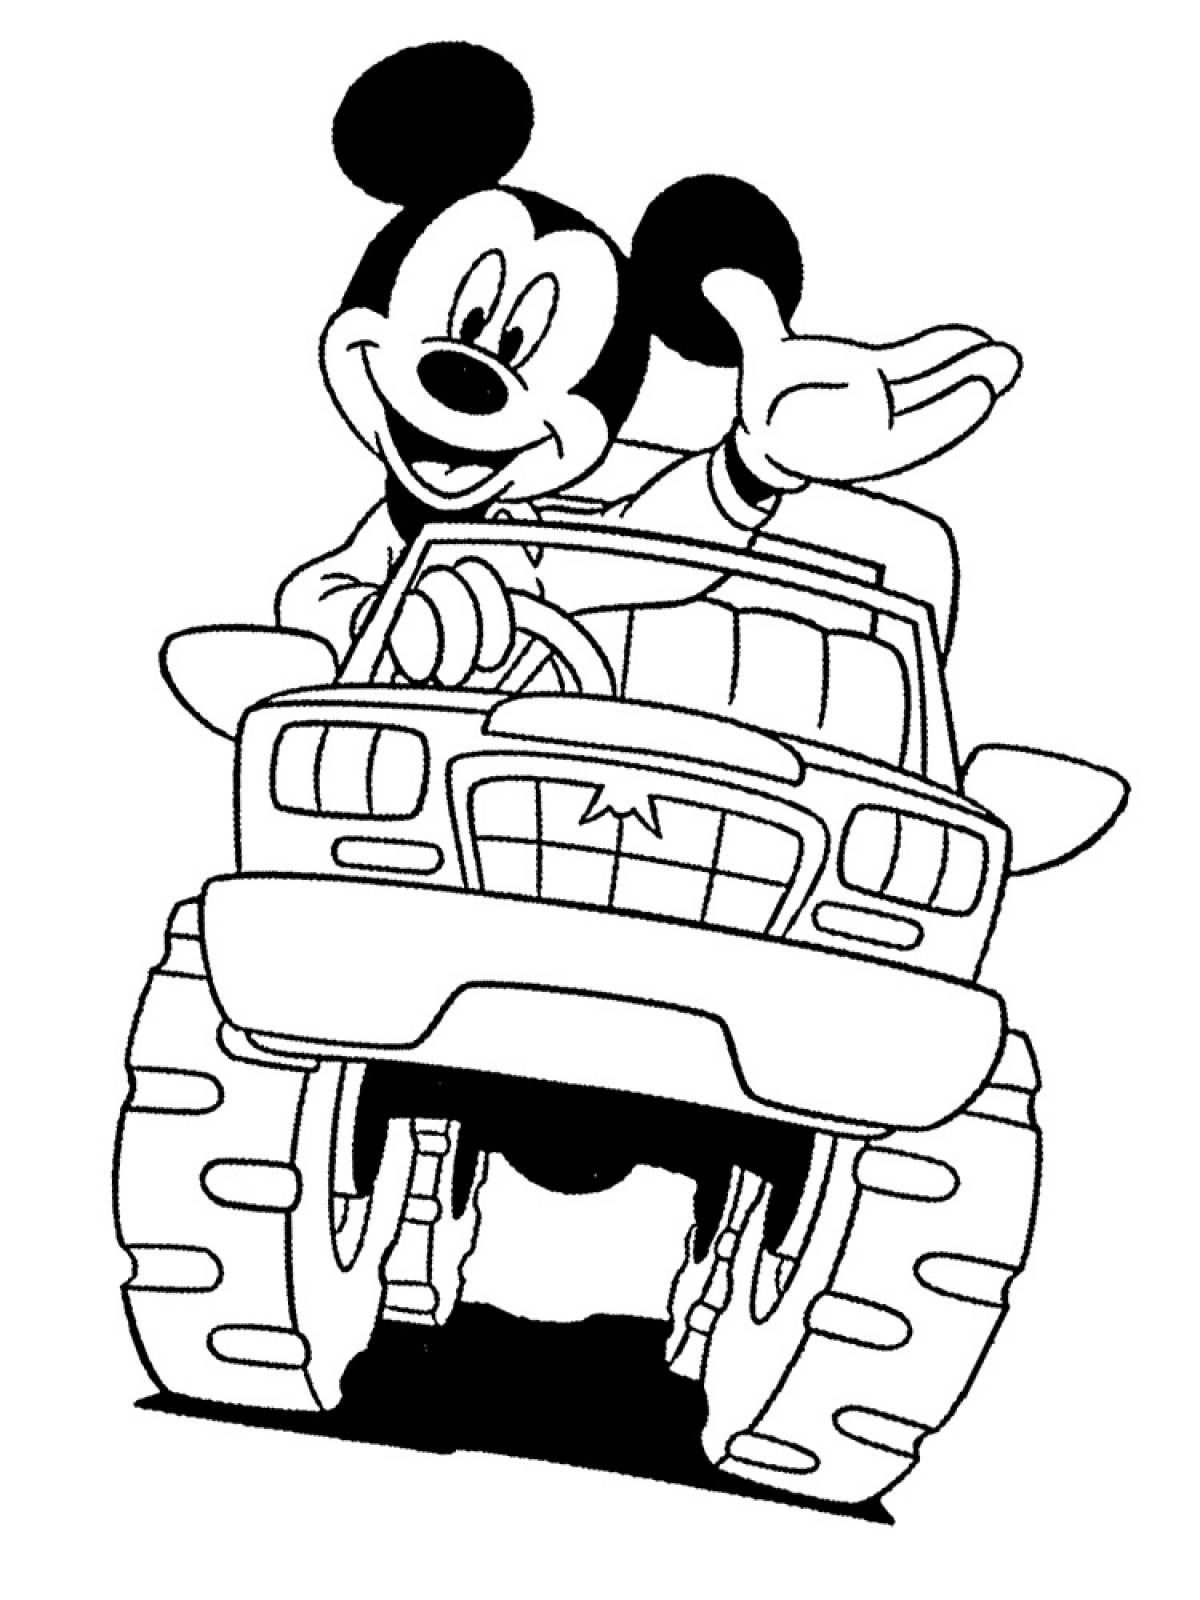 Mickey driving